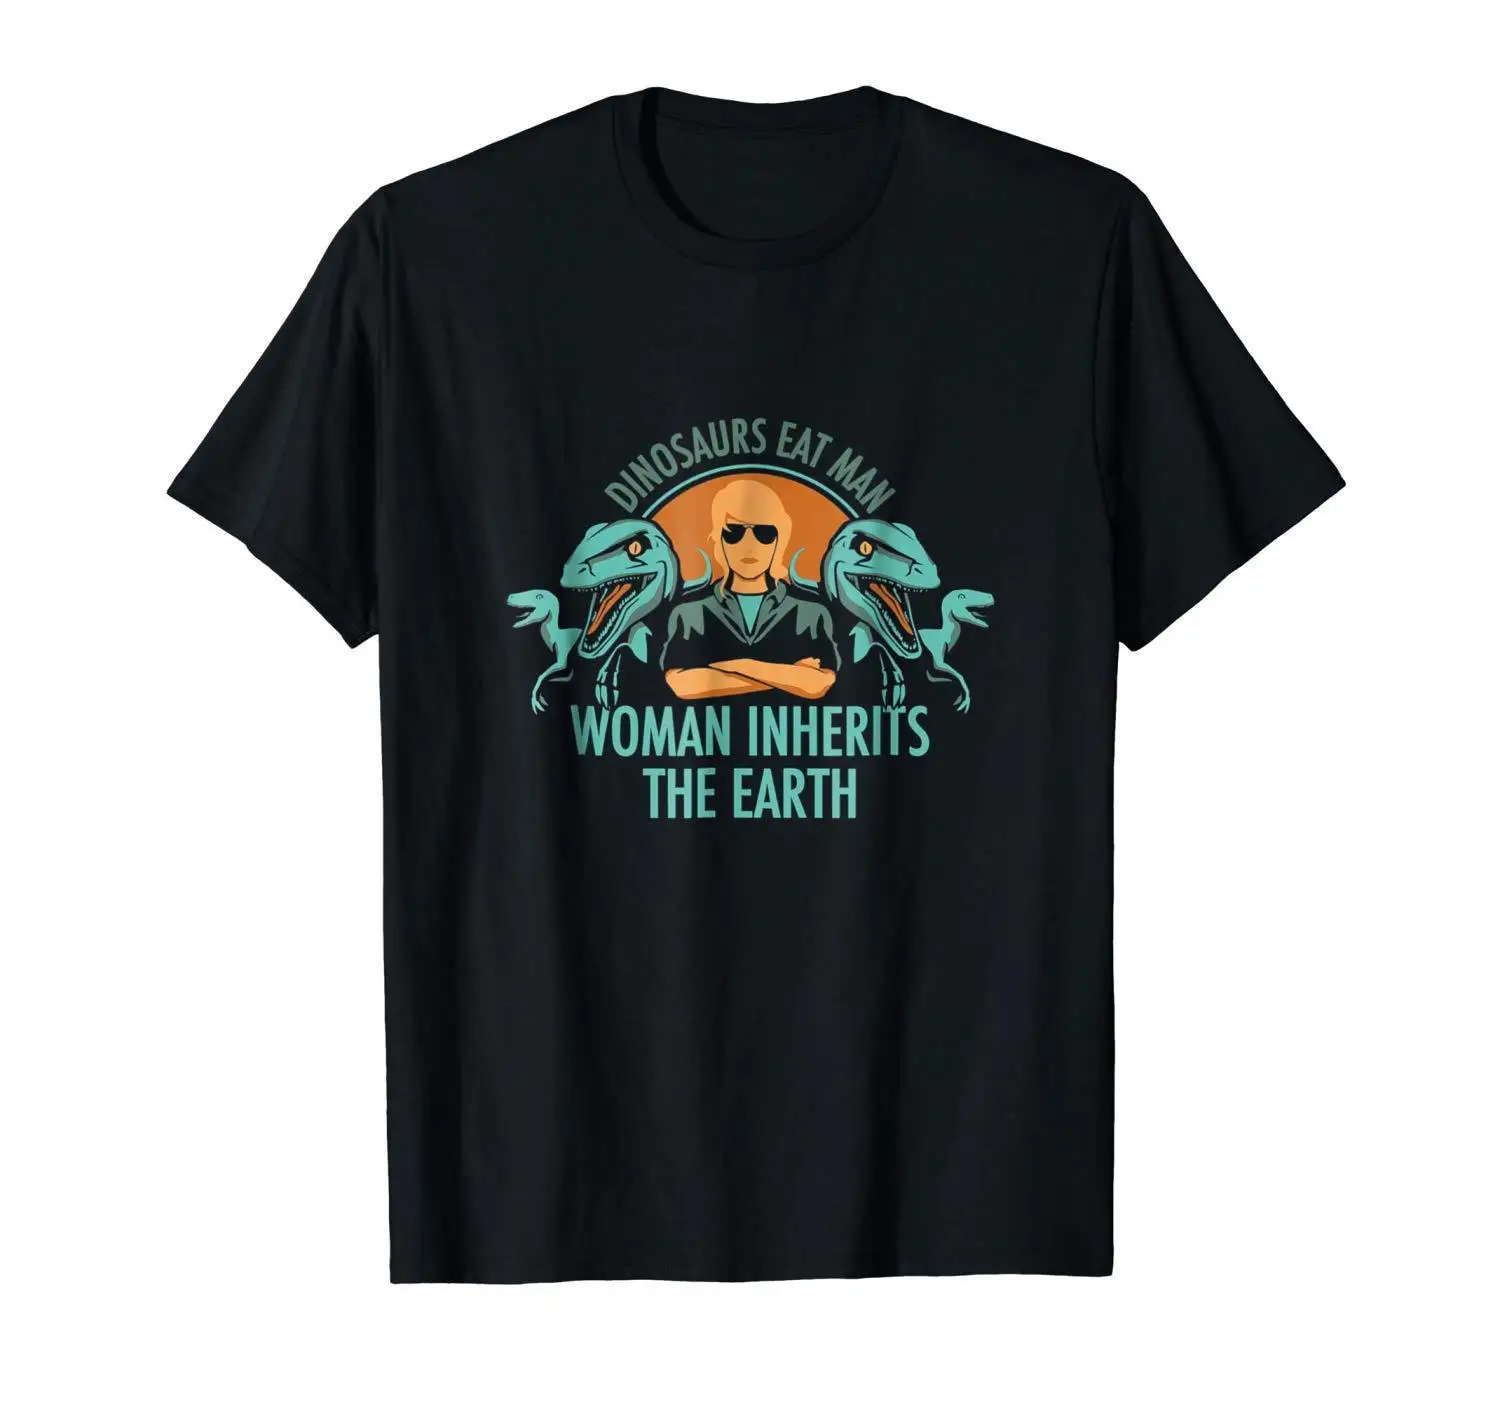 

Dinosaurs Eat Man Woman Inherits The Earth Funny Black T-shirt Cartoon t shirt men Unisex New Fashion tshirt free shipping